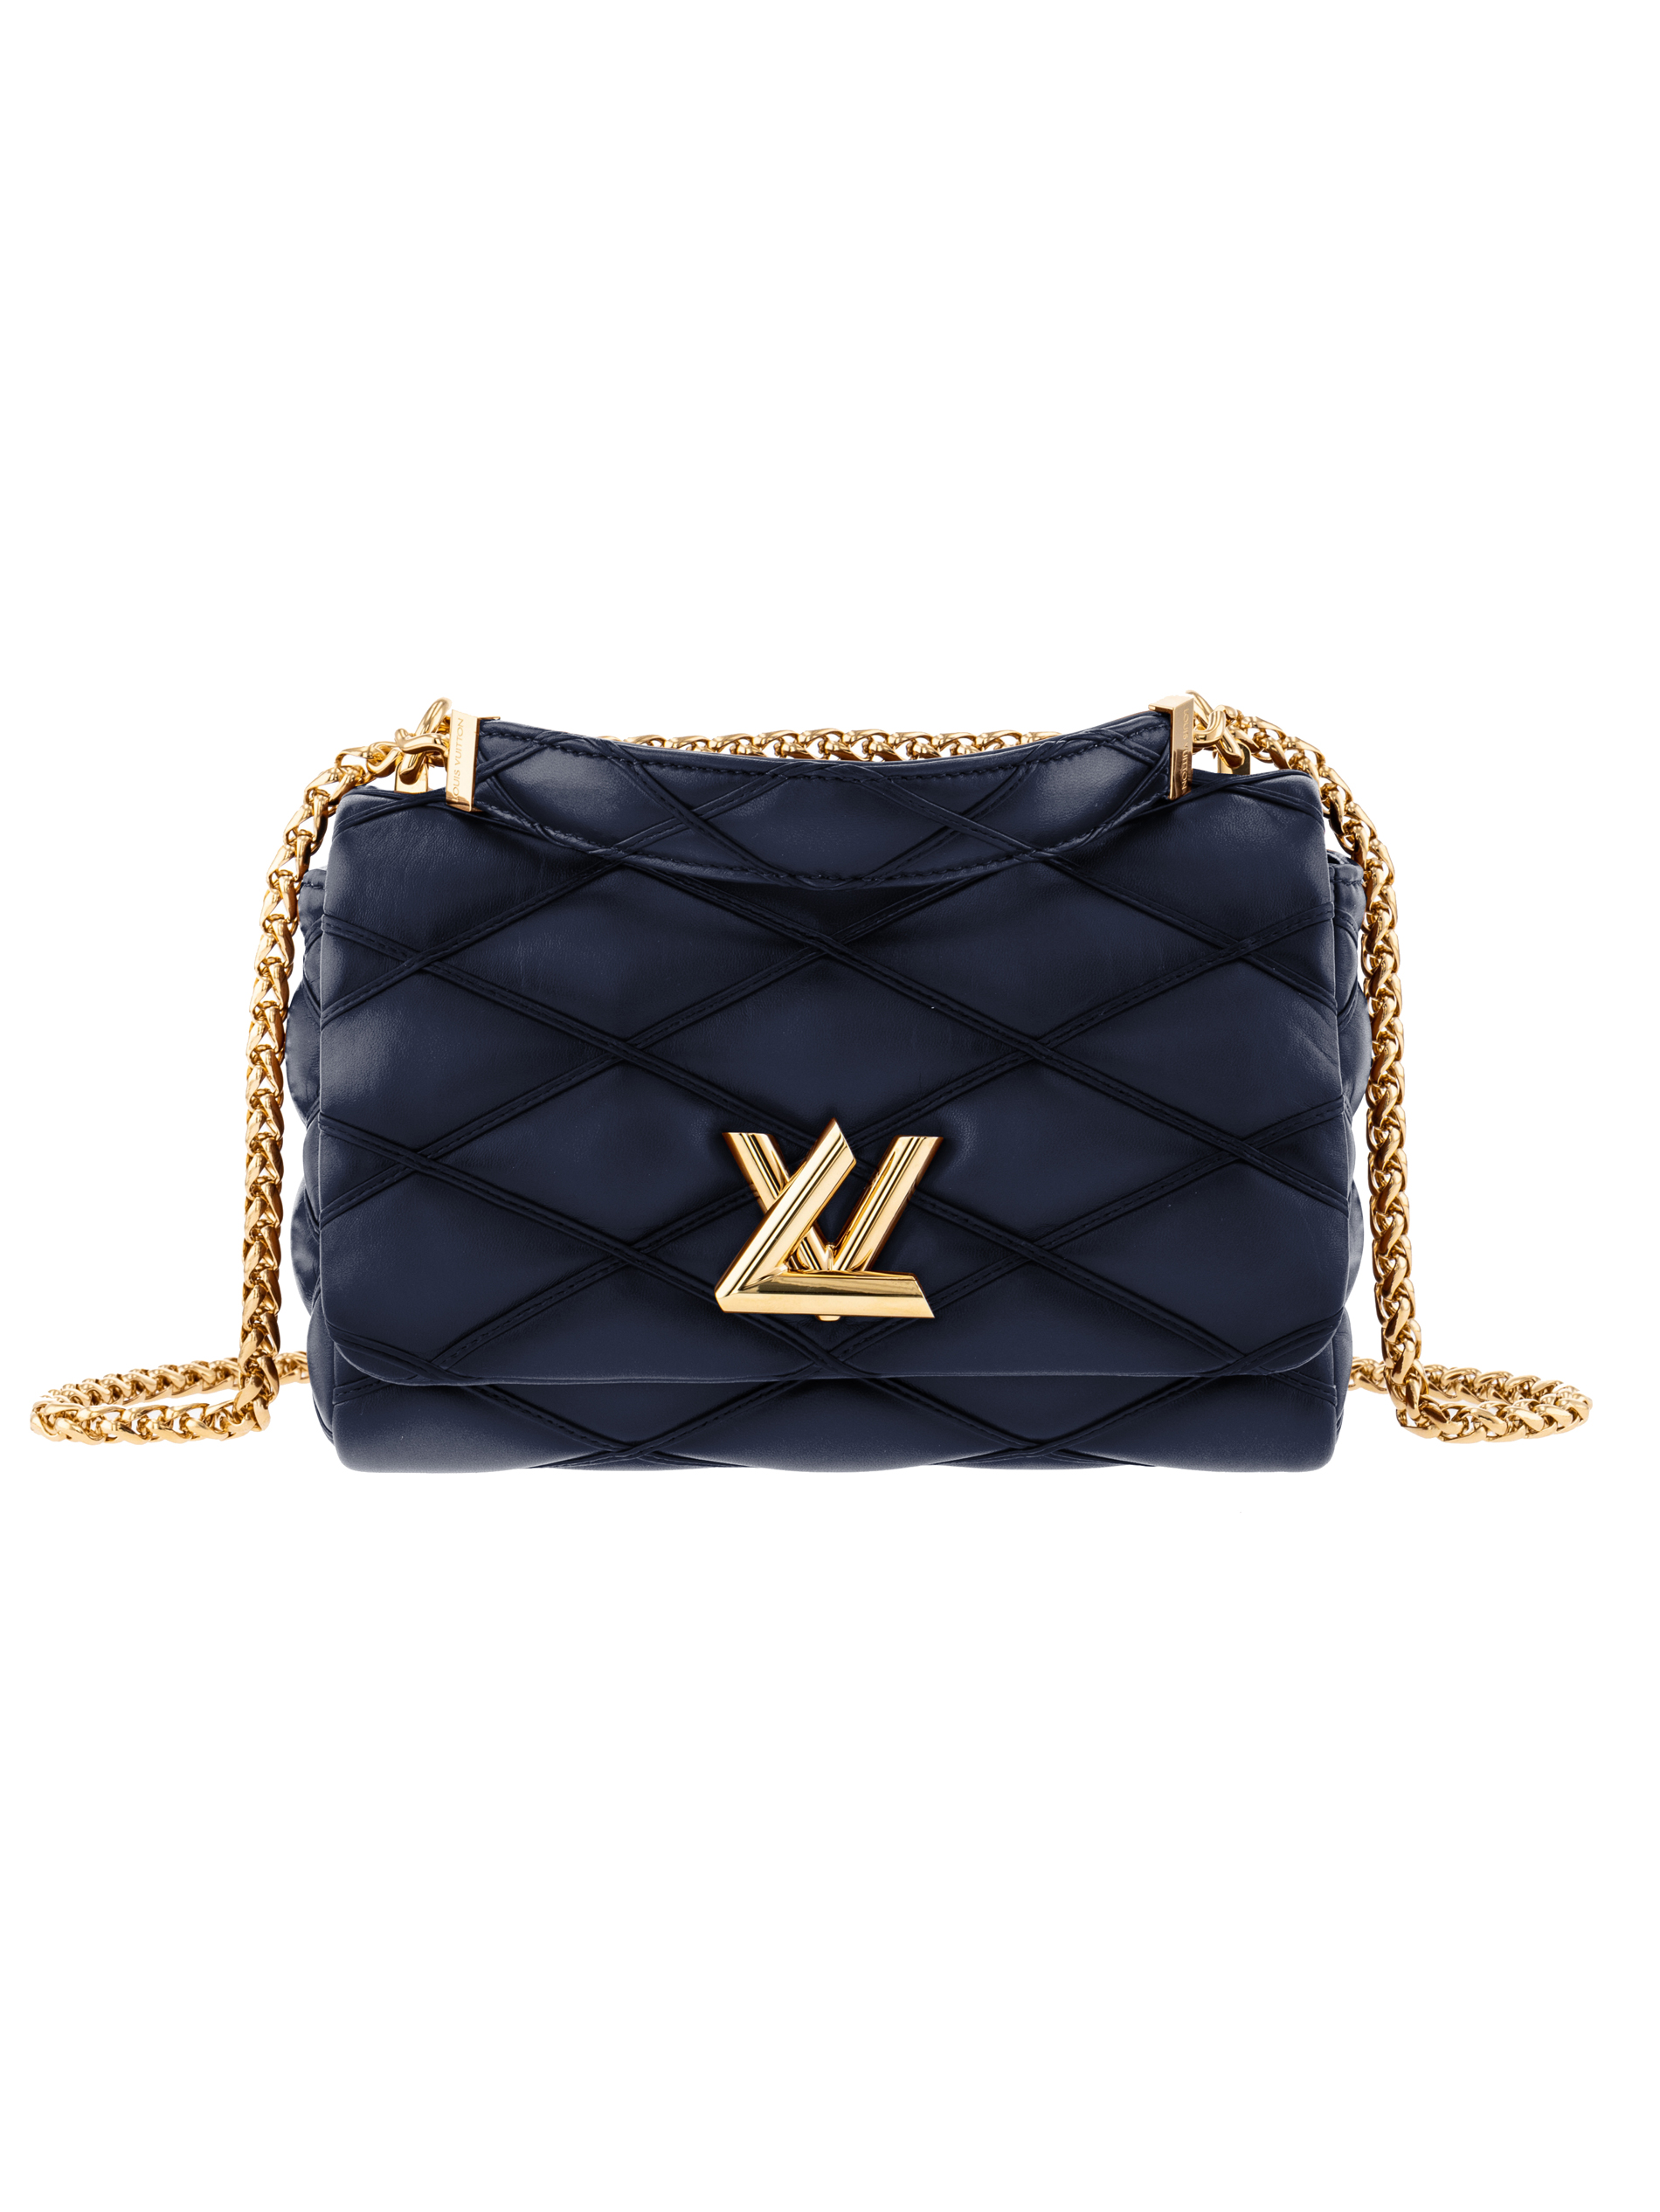 A new icon: Louis Vuitton launches GO-14 bag